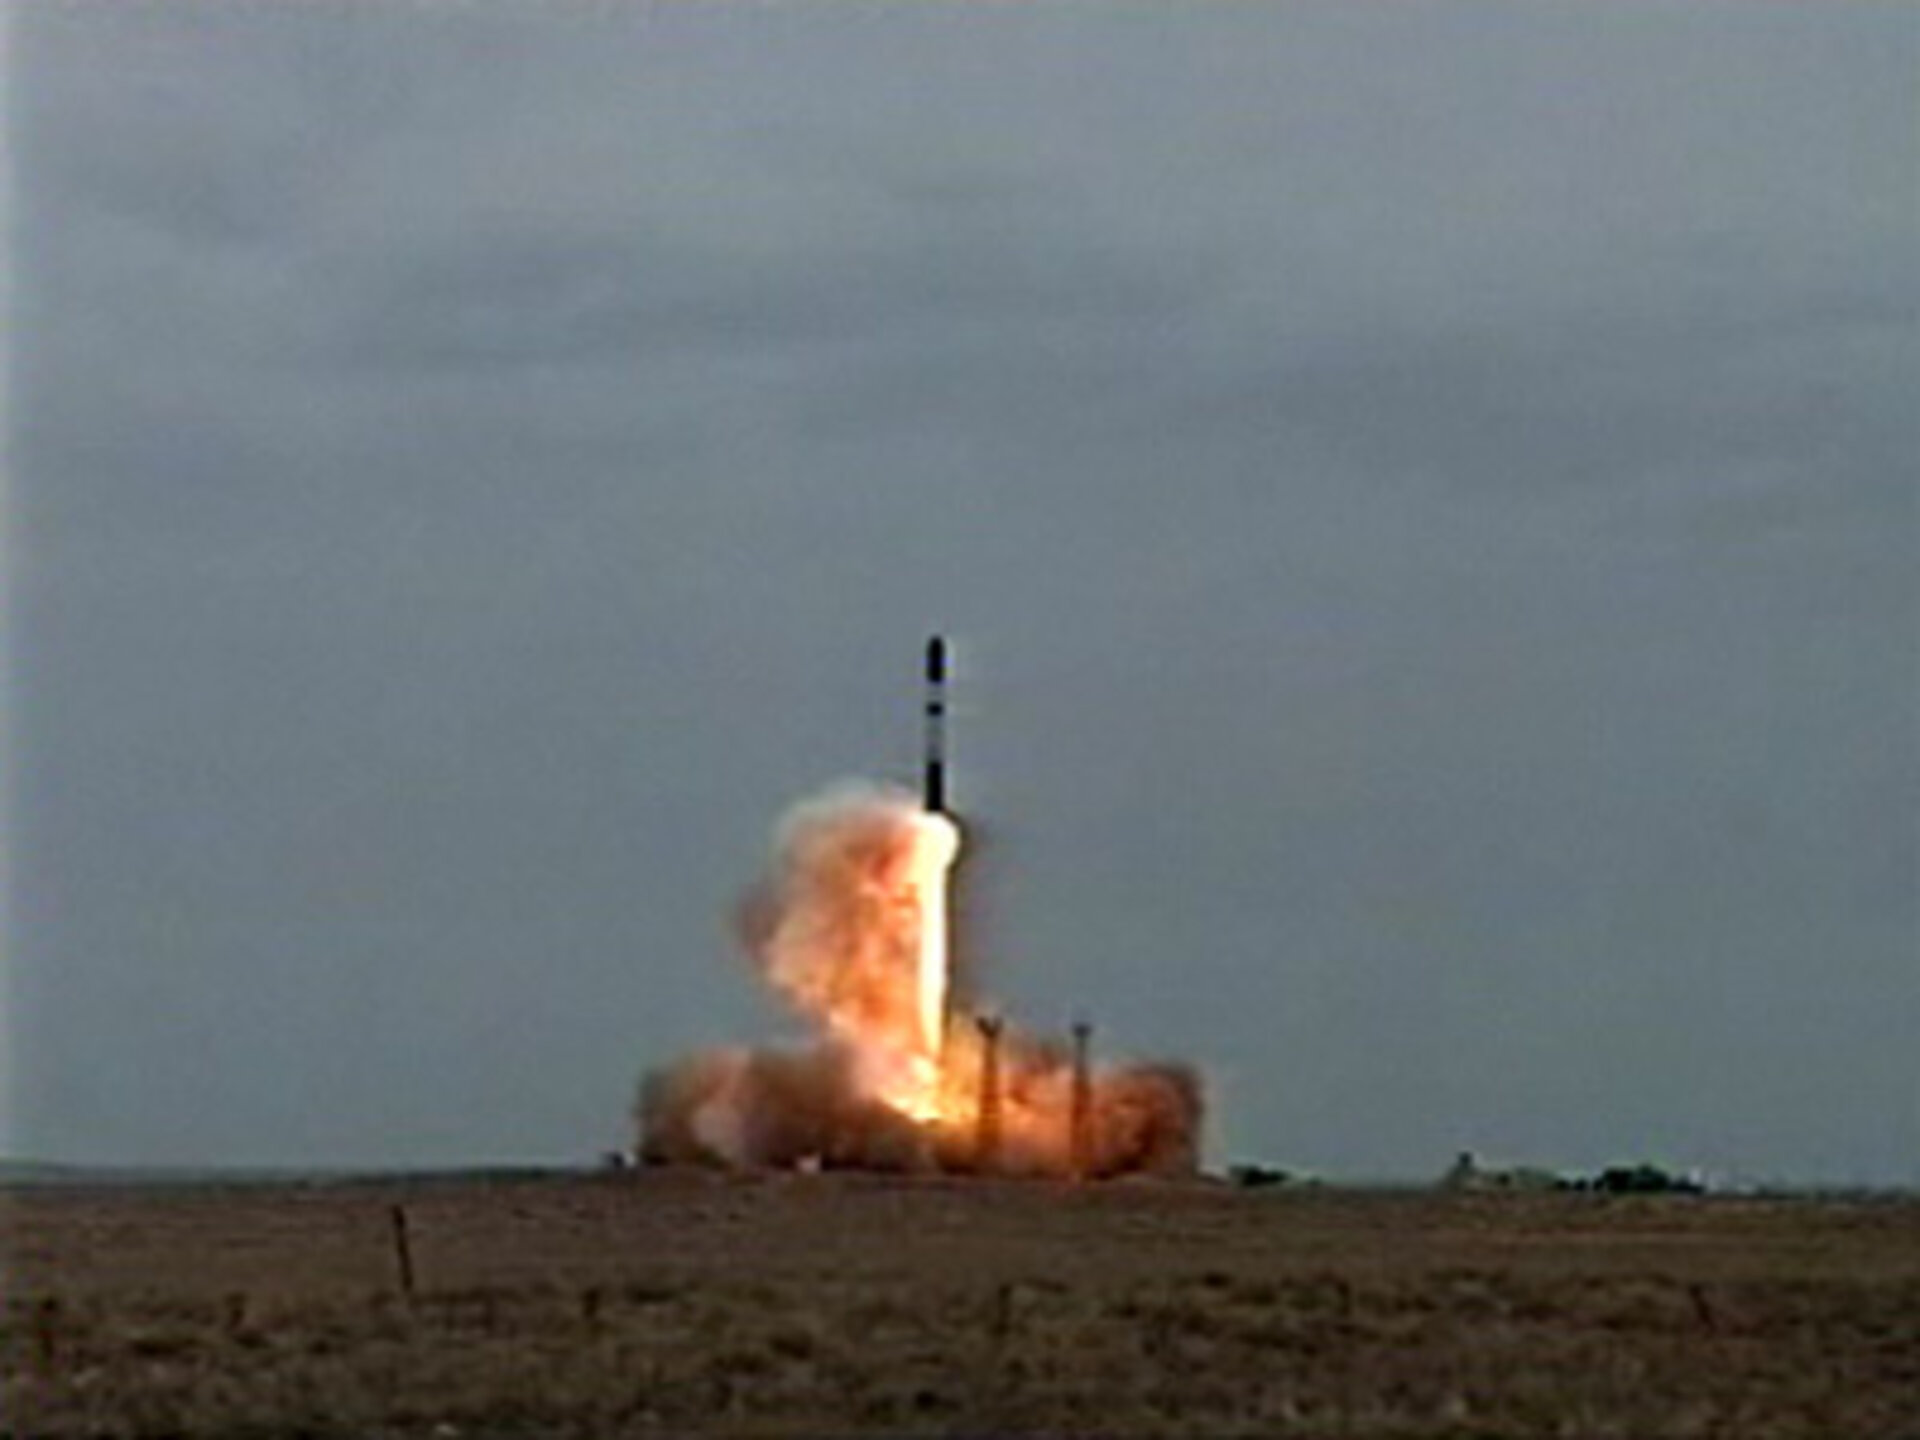 Liftoff of ESA's CryoSat-2